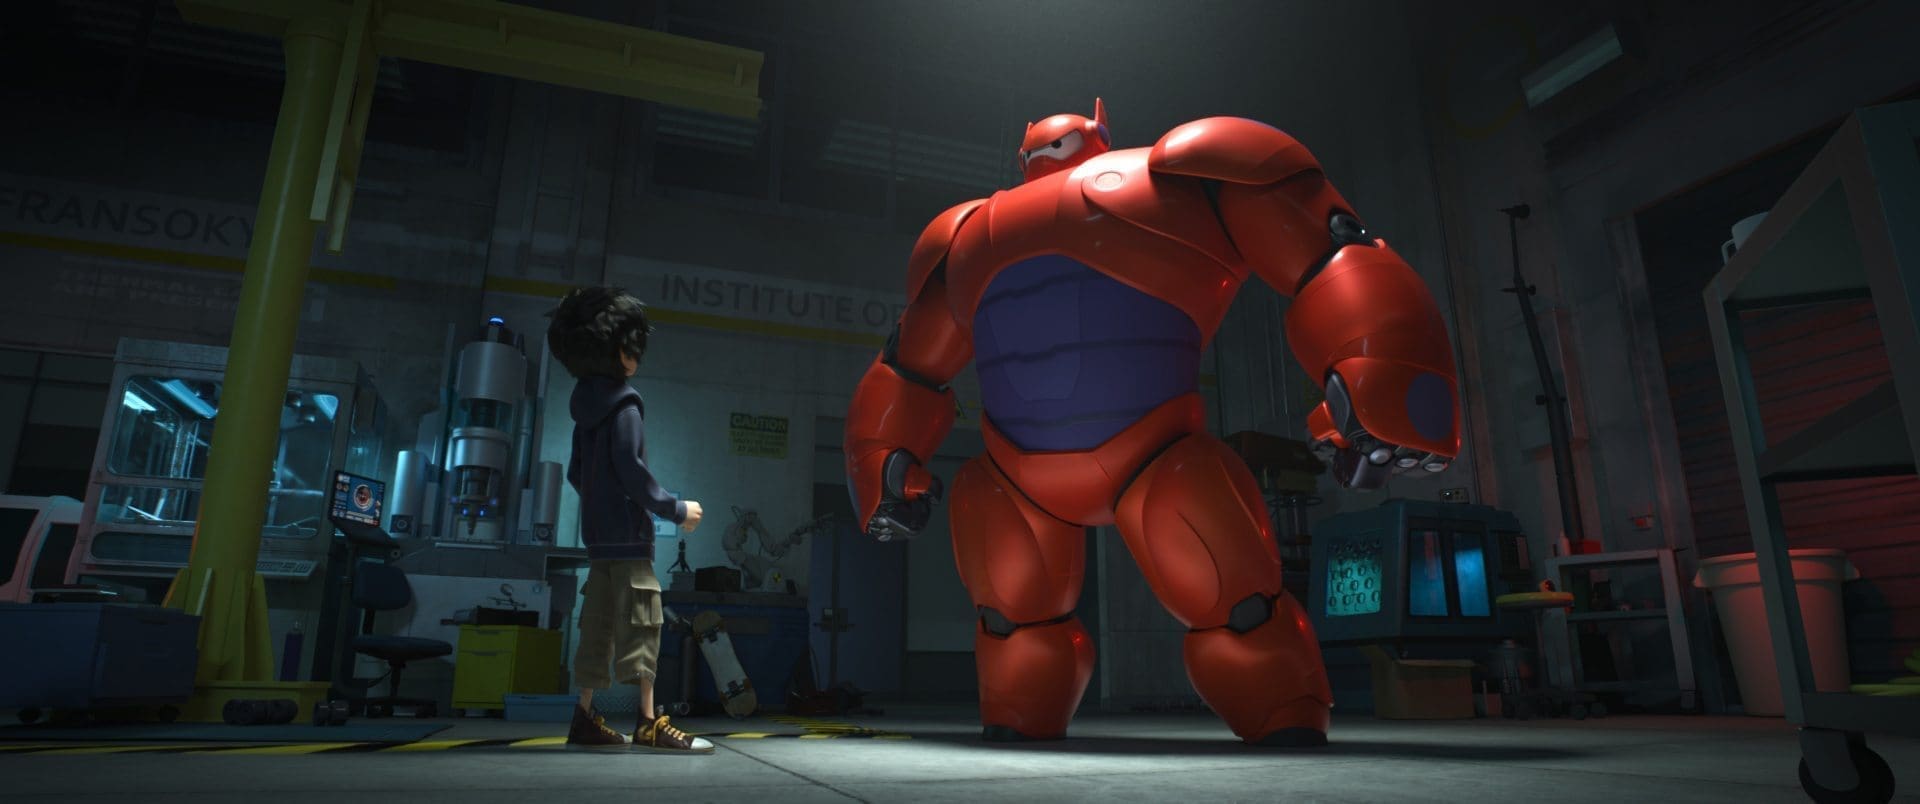 Big Hero 6, marvel comics, trailer, walt disney animation studios